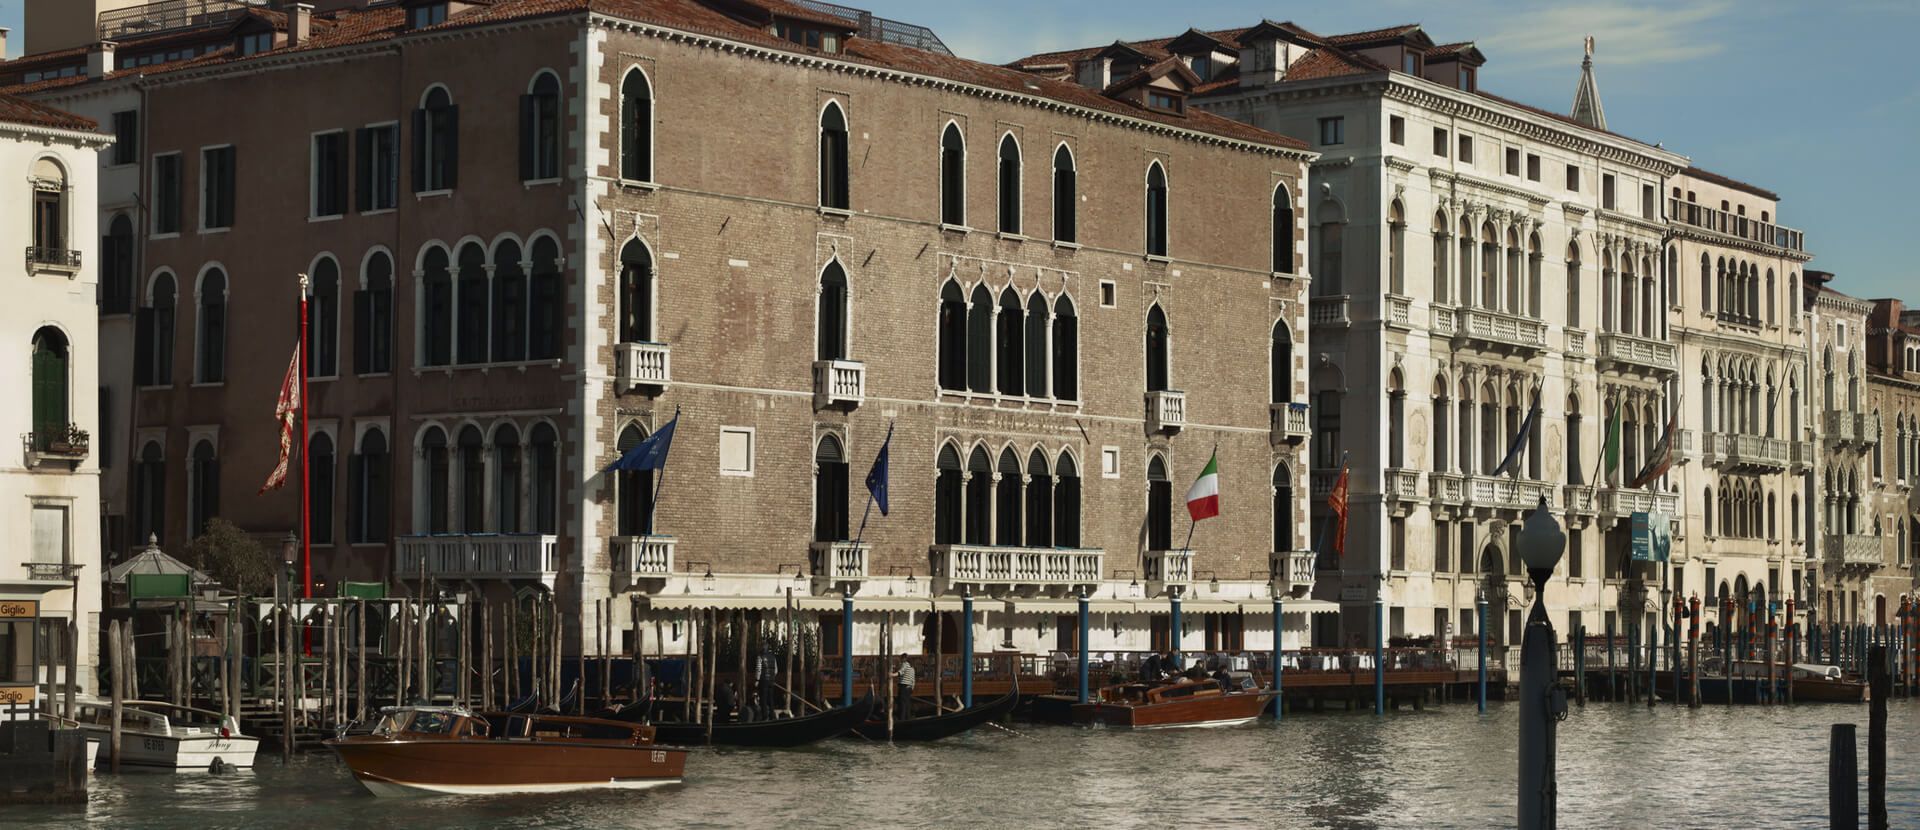 The Gritti Palace, Venice